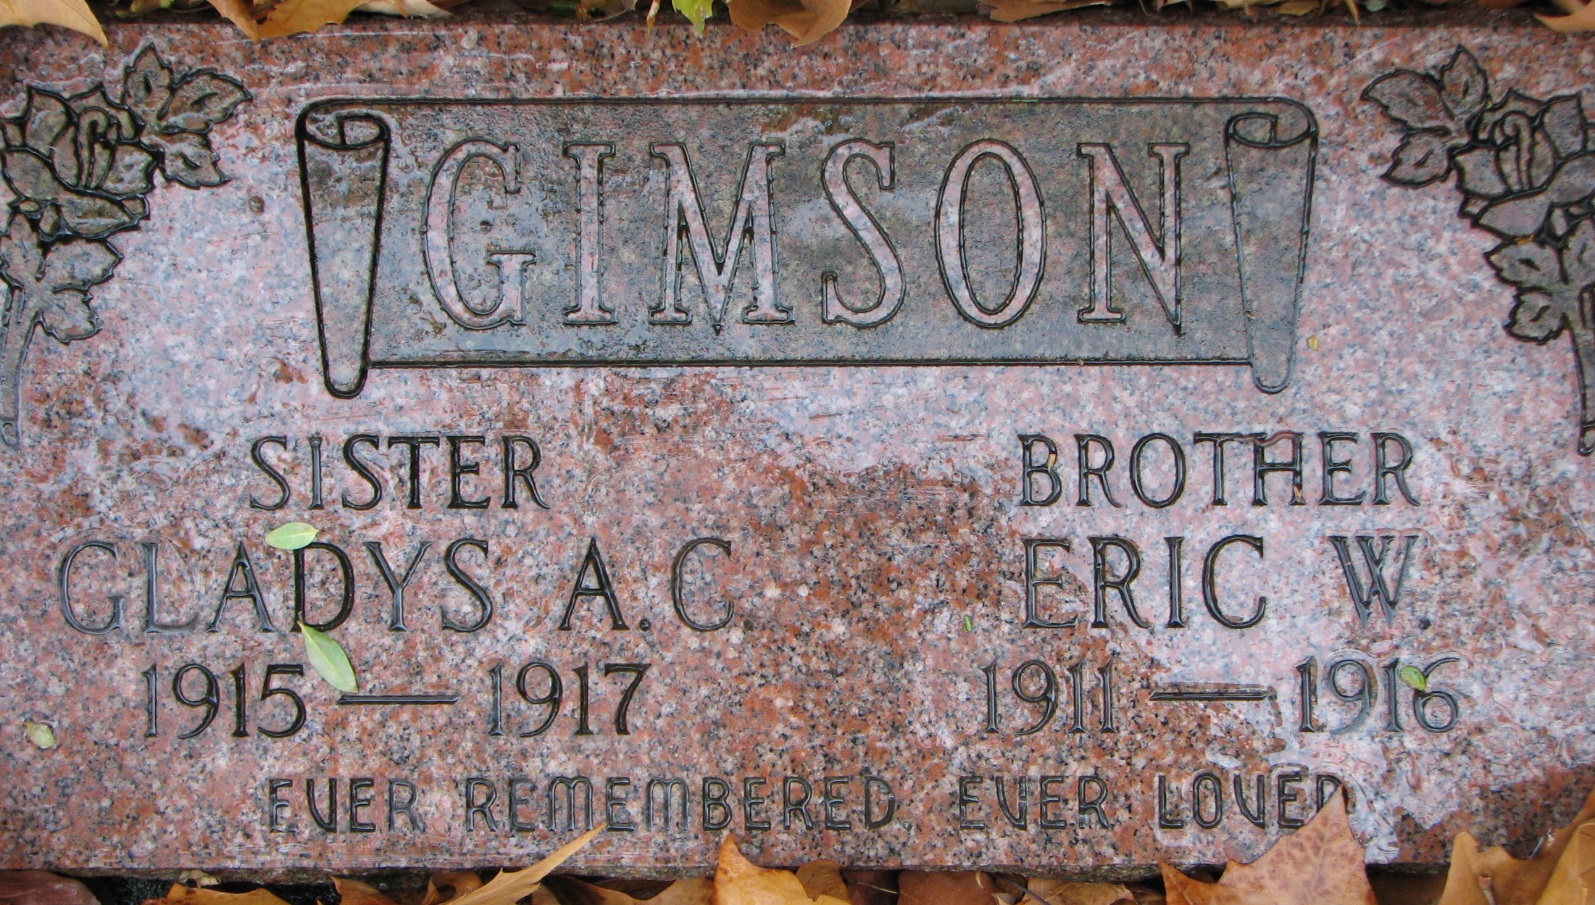 GIMSON-Gladys A.G. 1915-1917_Eric W. 1911-1916